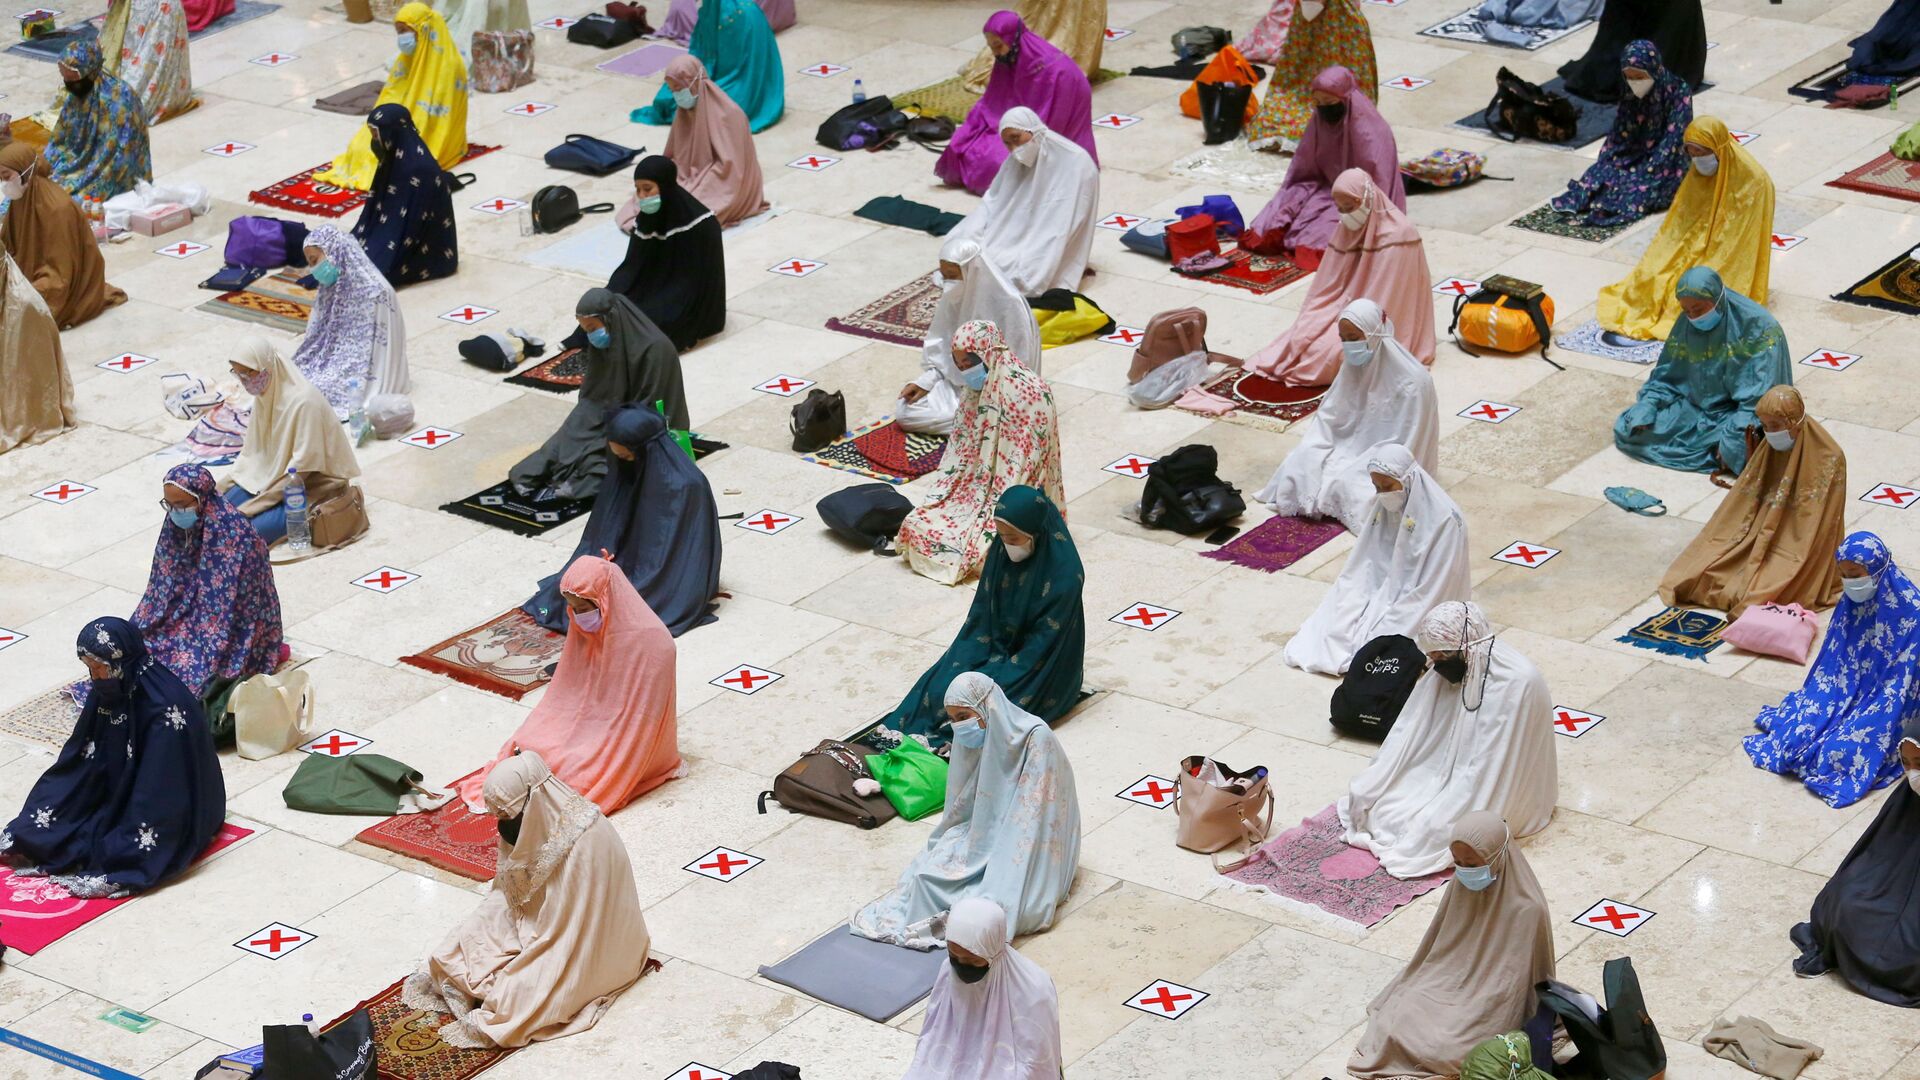 Мусульмане молятся накануне старта священного месяца Рамадан в Индонезии  - Sputnik Таджикистан, 1920, 16.04.2021